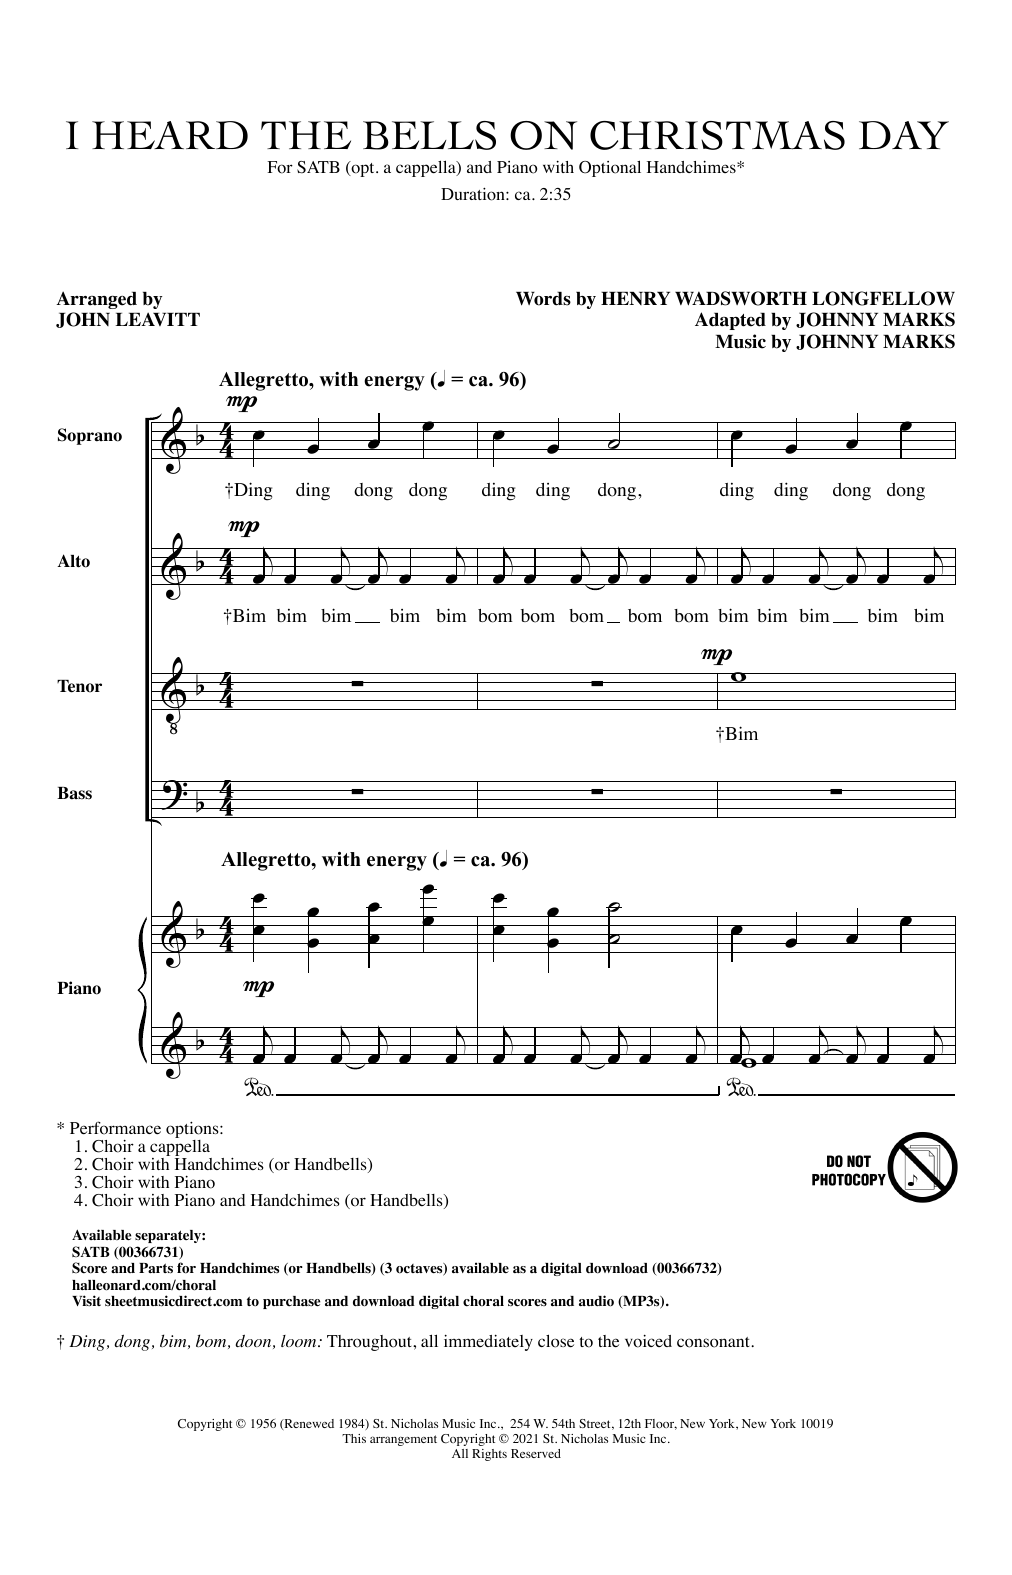 Johnny Marks I Heard The Bells On Christmas Day (arr. John Leavitt) Sheet Music Notes & Chords for SATB Choir - Download or Print PDF